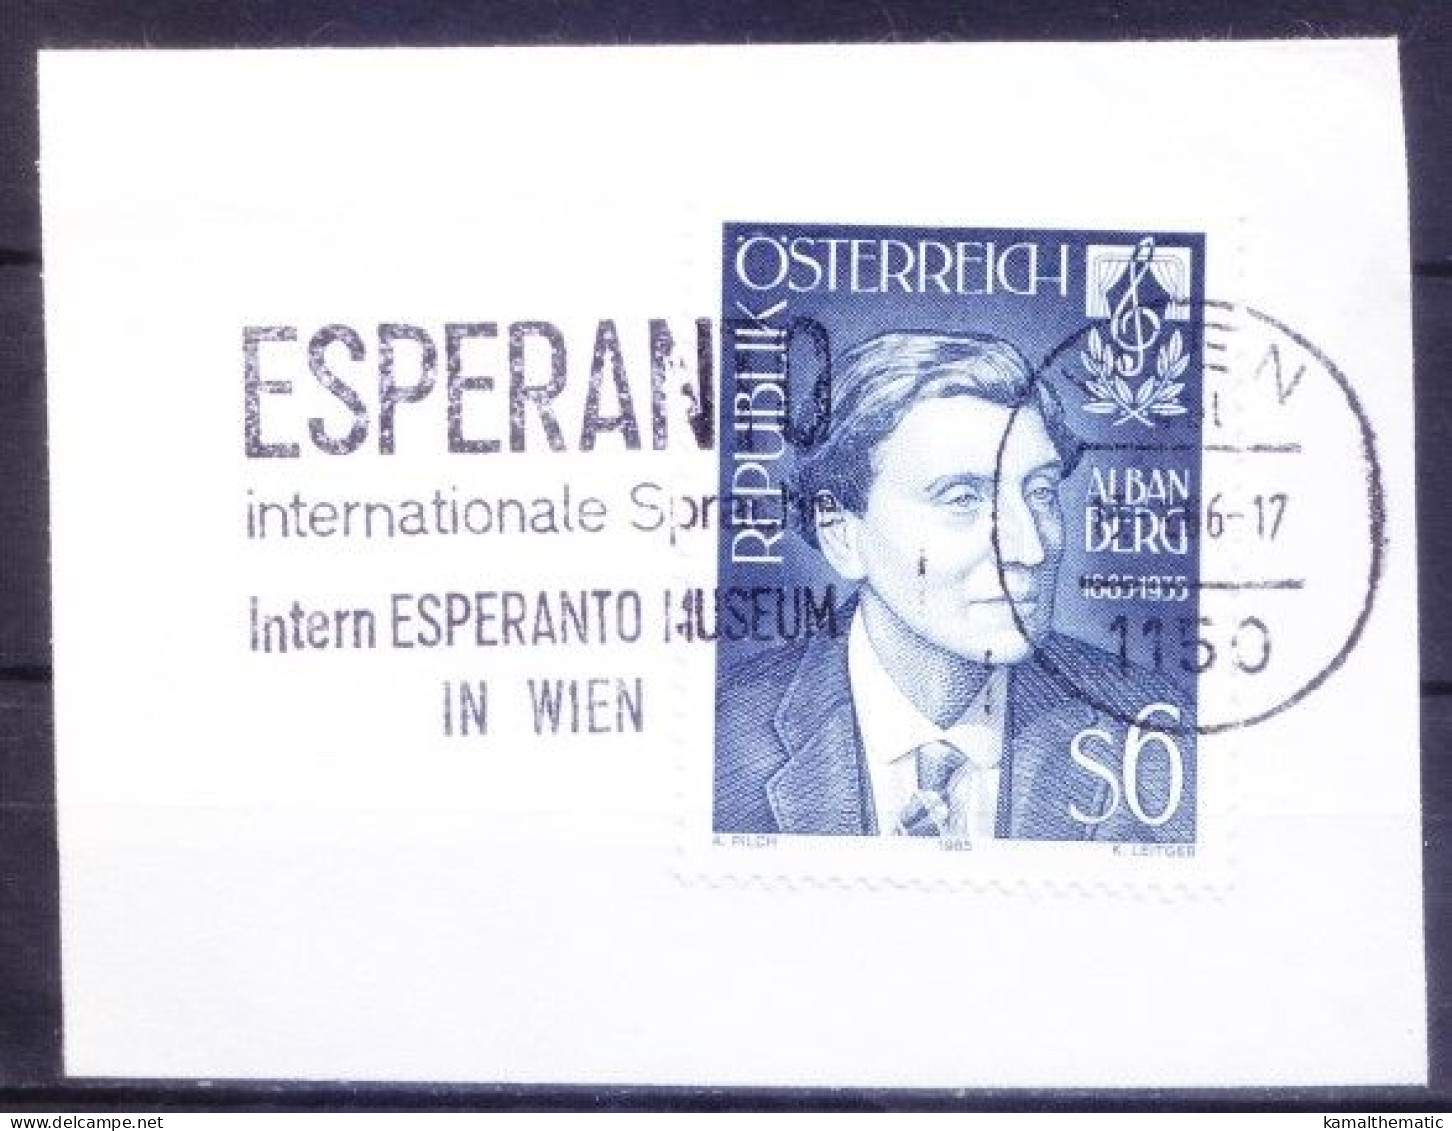 Slogan International Esperanto Museum In Vienna On Austria 1985 Alban Berg Stamp - Museums